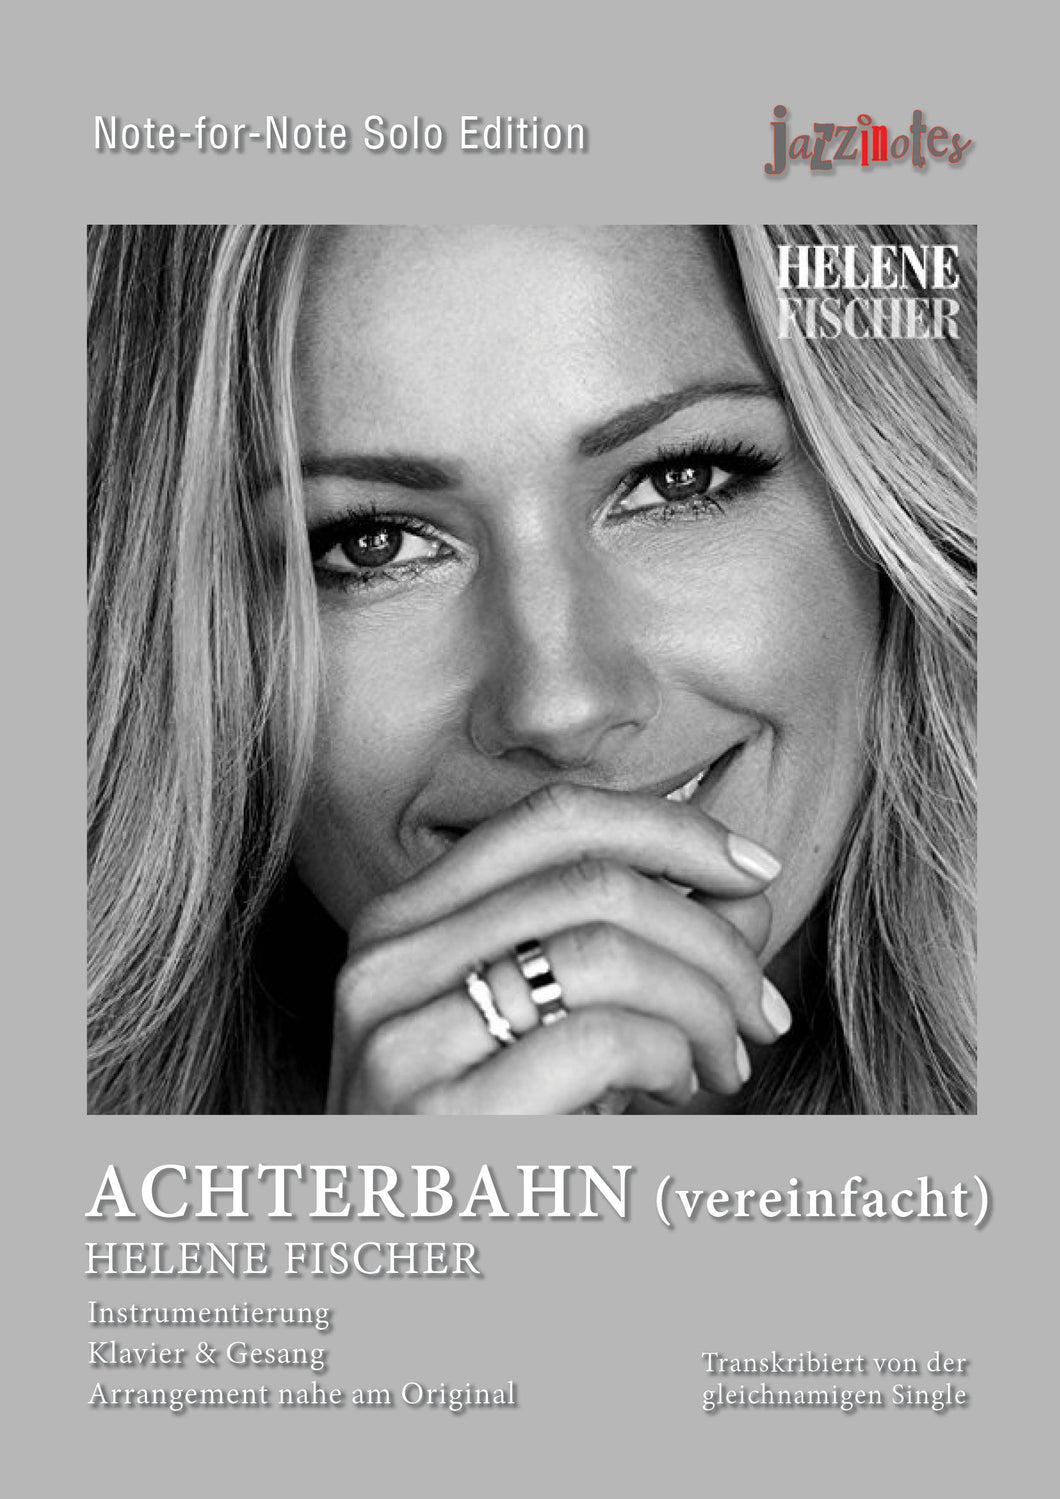 Fischer, Helene: Achterbahn (Simplified Version) - Sheet Music Download